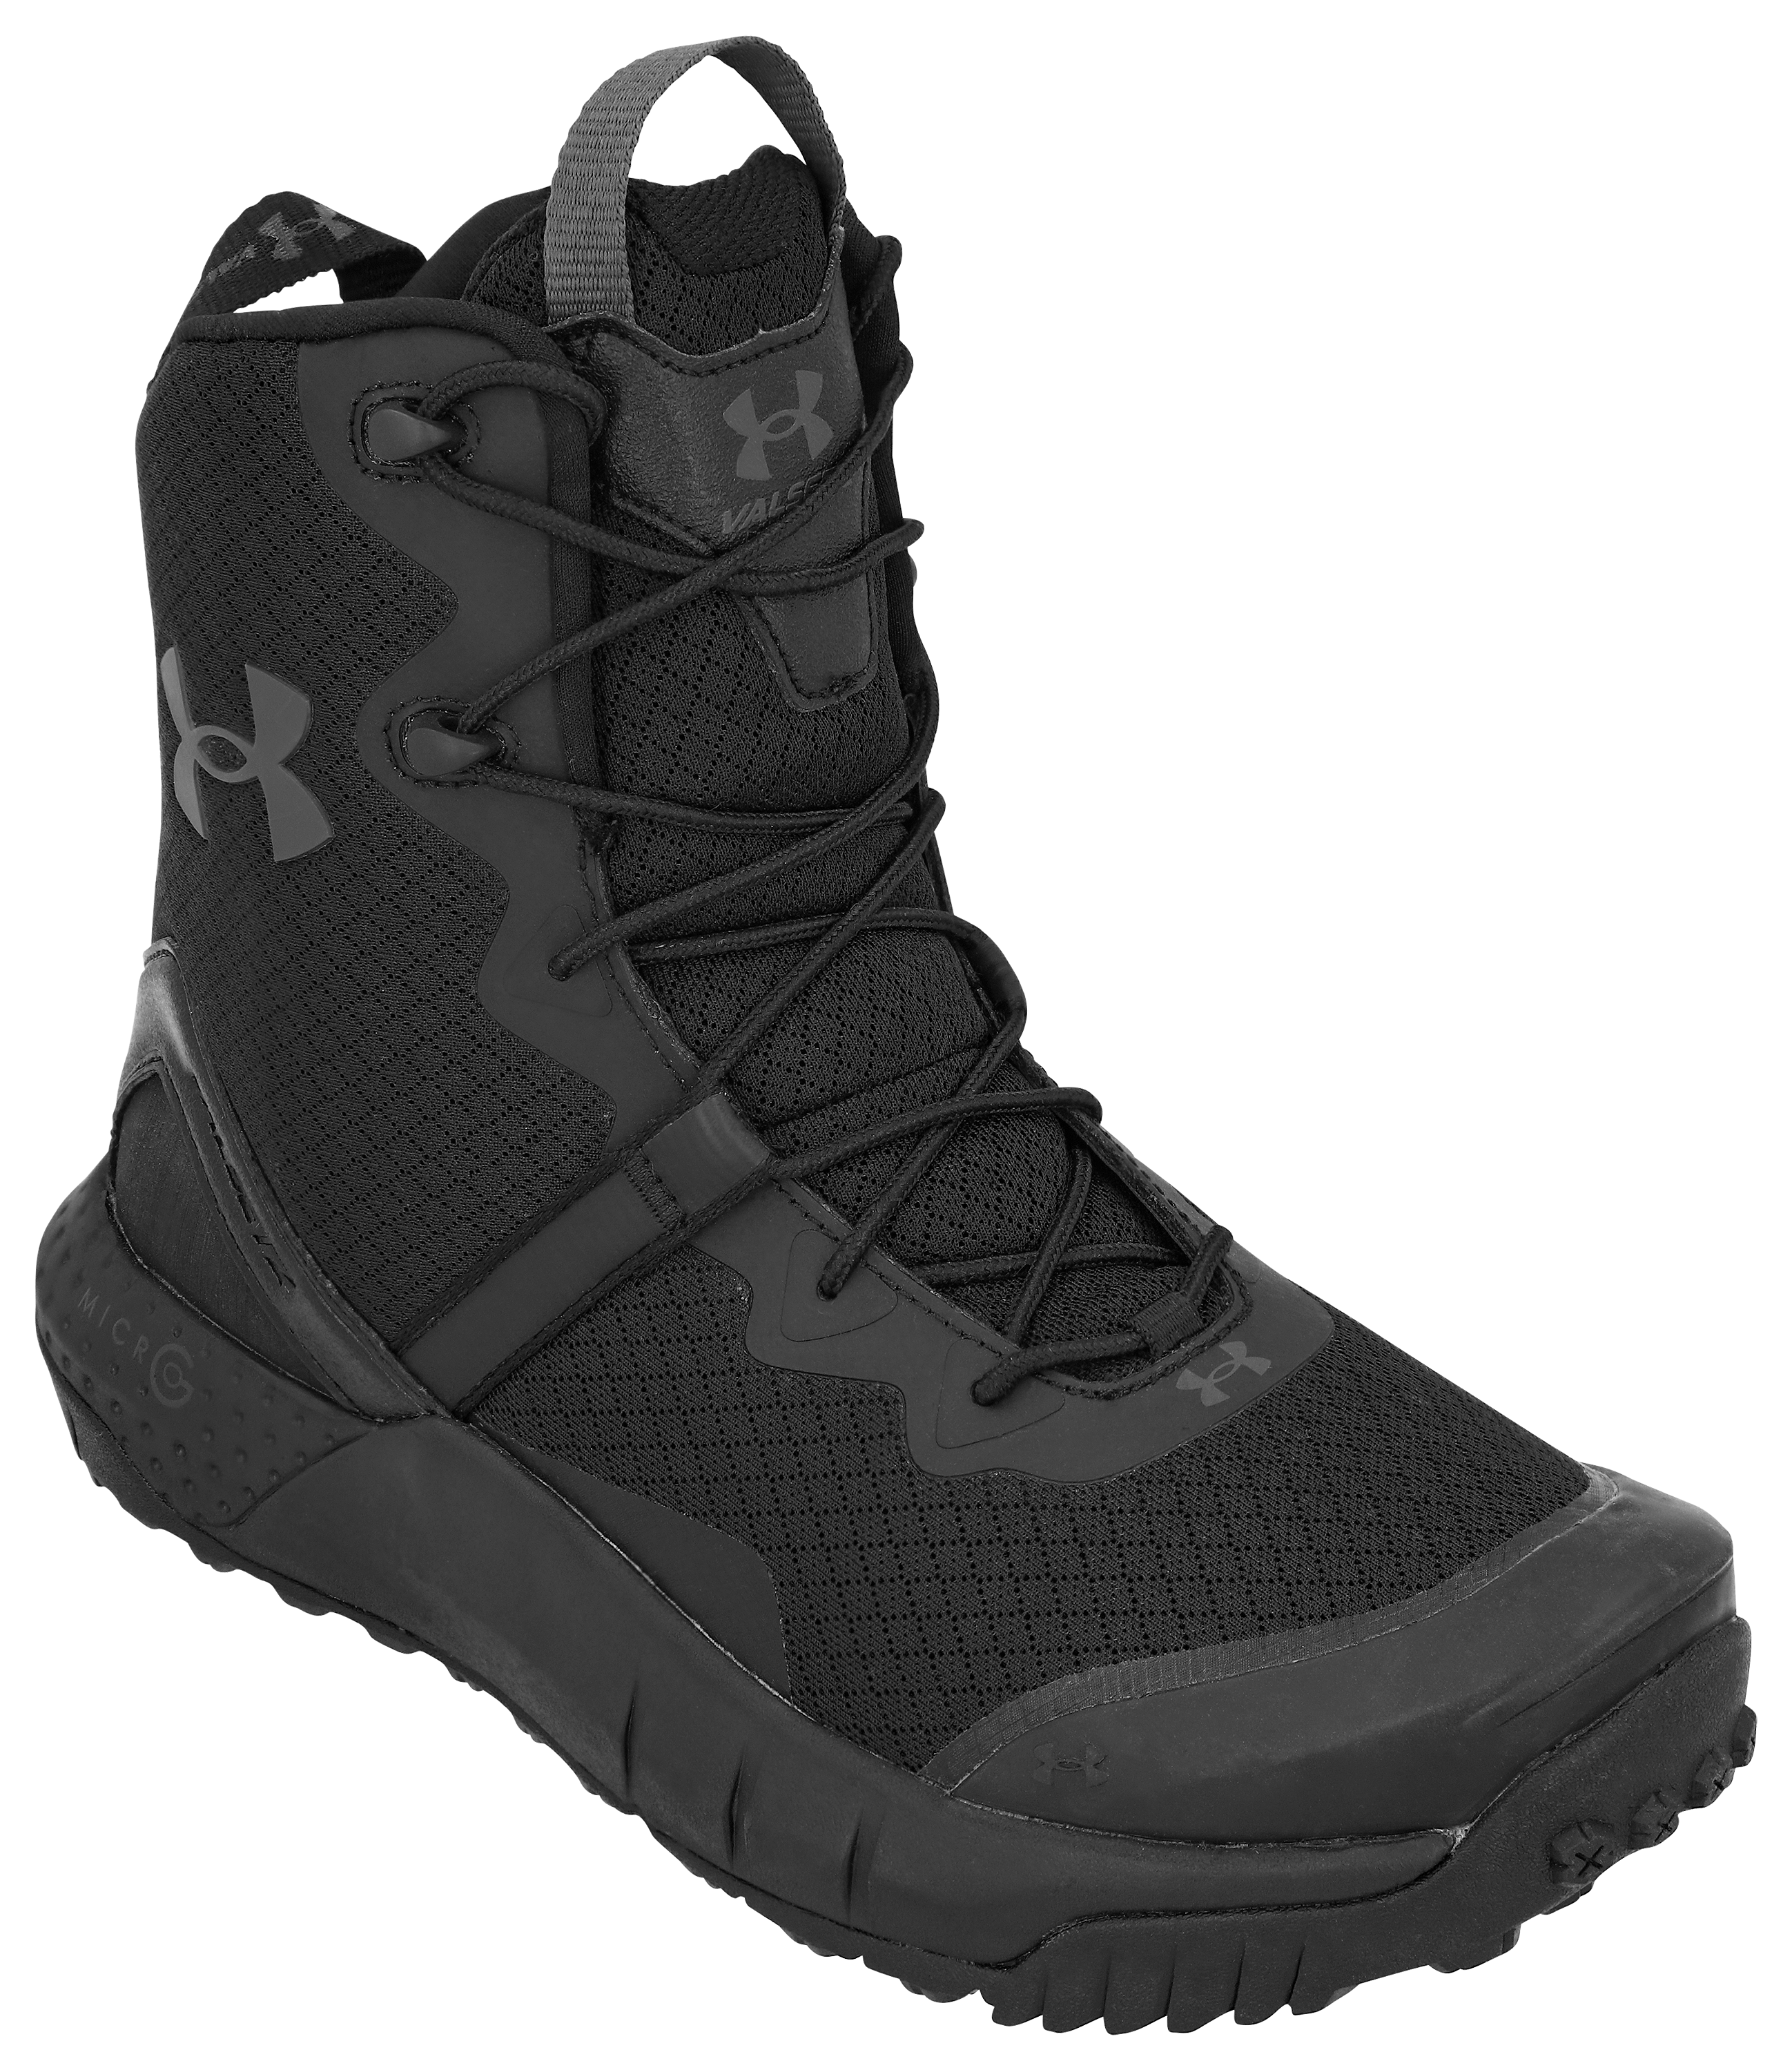 Under Armour Micro G Valsetz Side Zip Tactical Boots for Men - Black - 12M